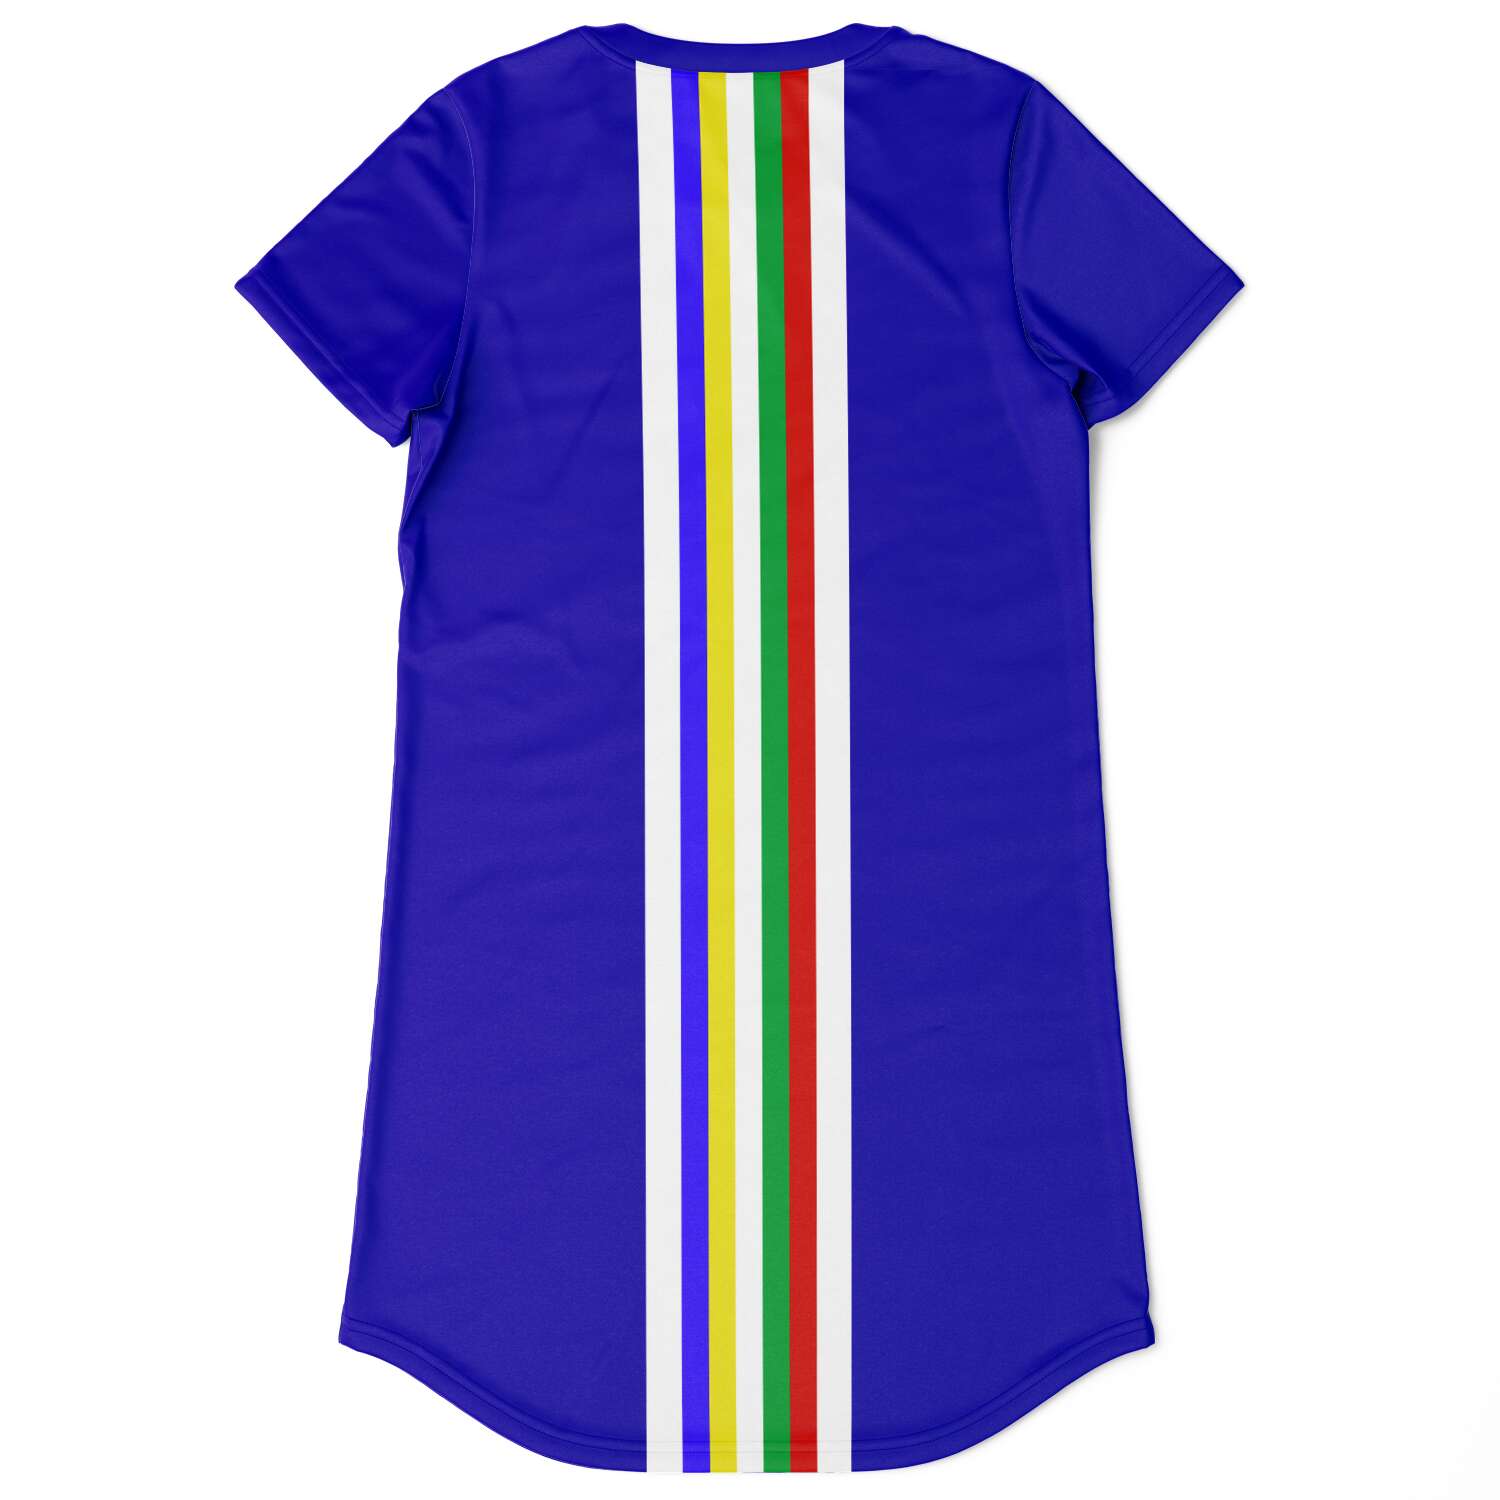 Order of the Eastern Star - Blue Light T-Shirt Dress